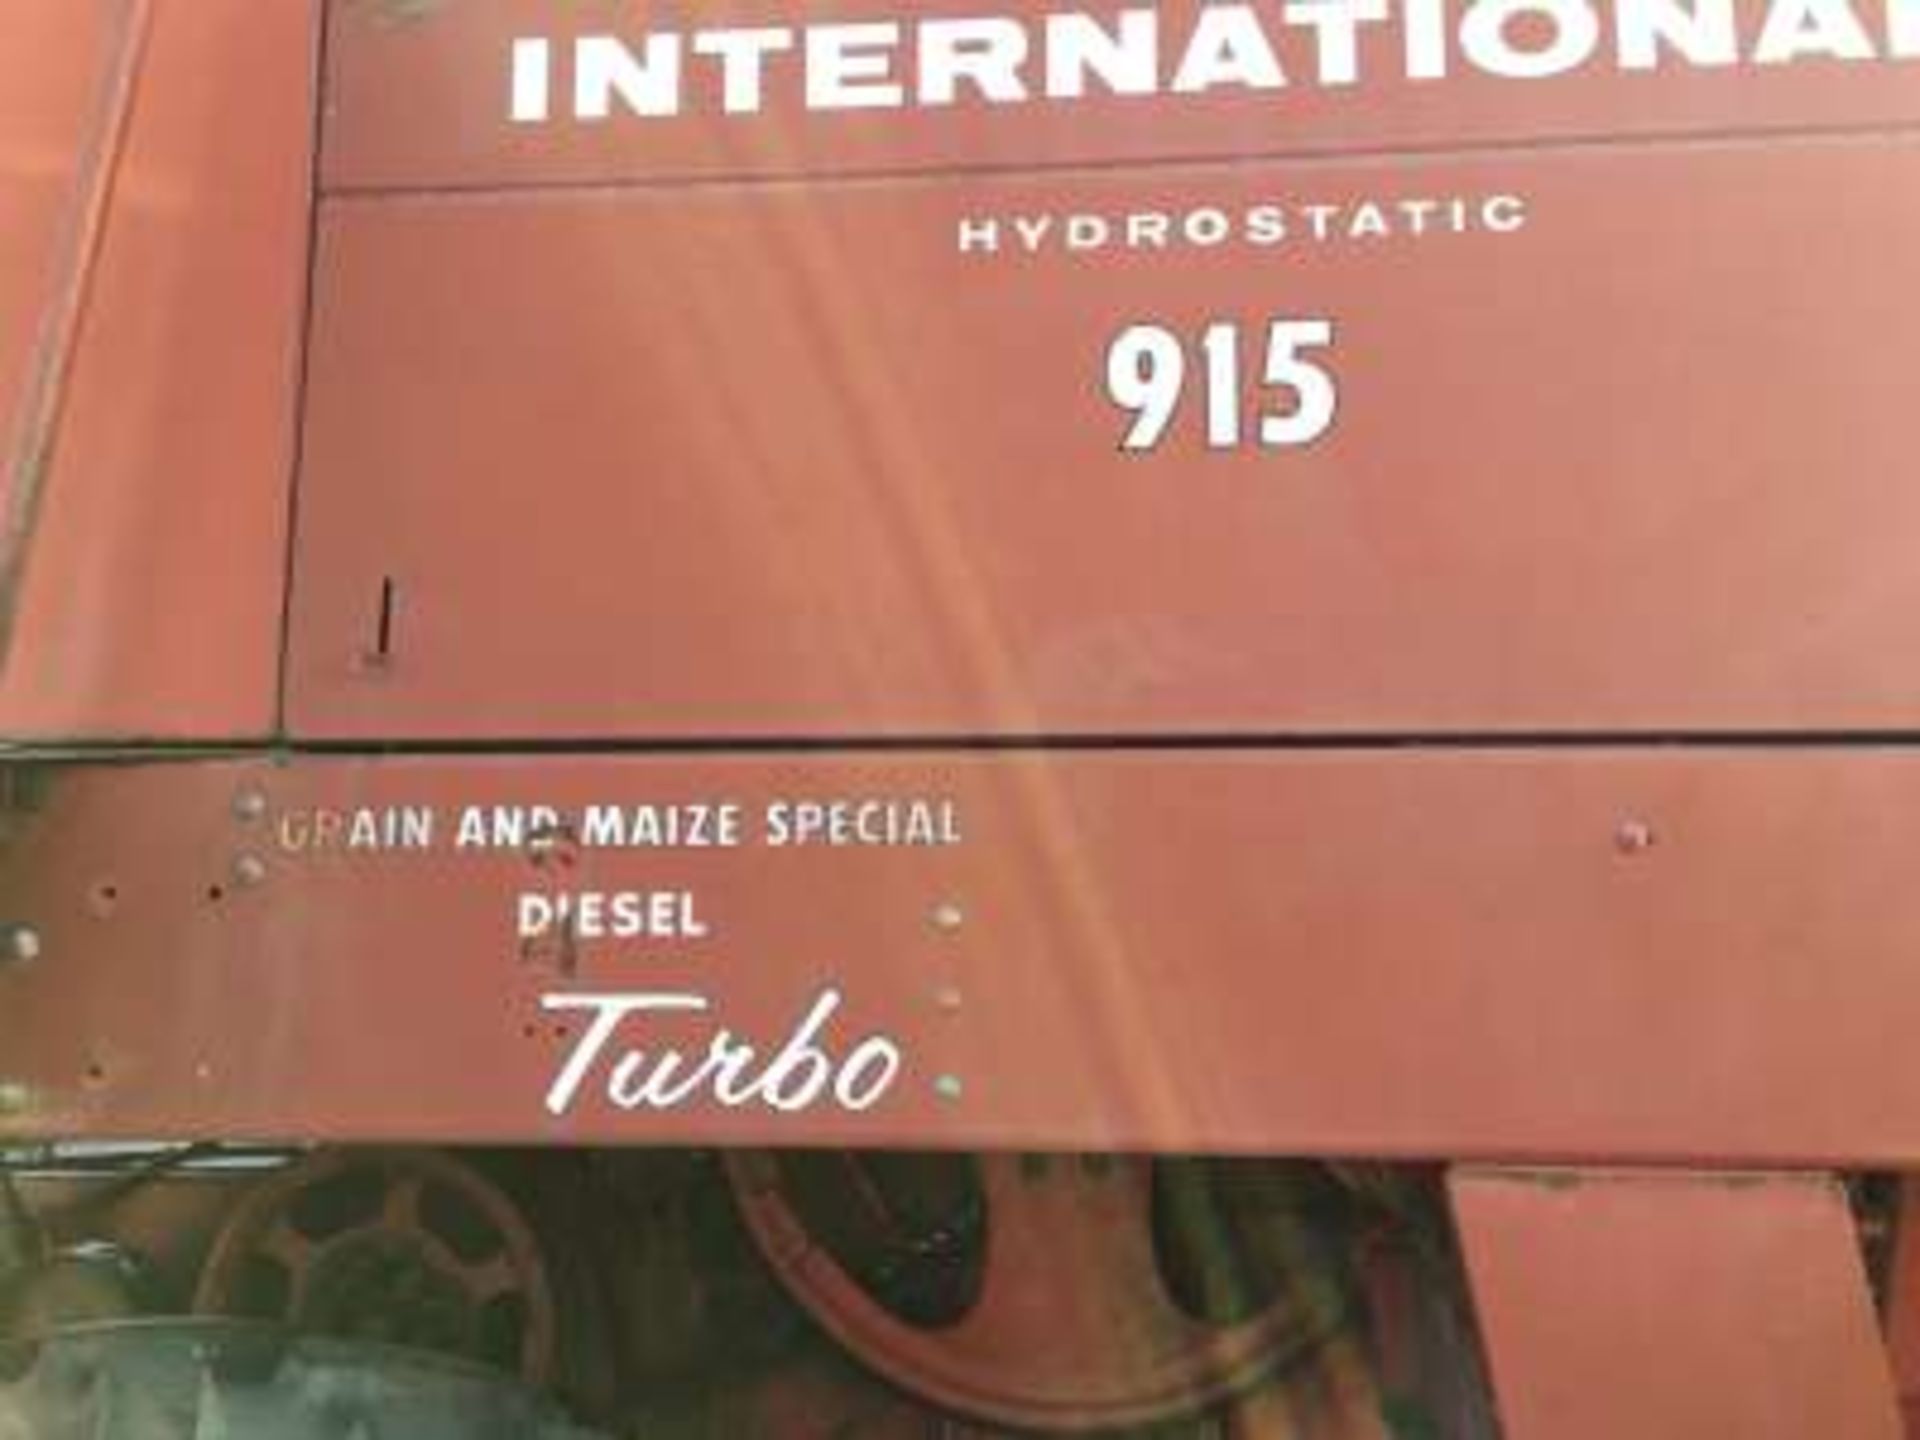 IHC 915 combine, hydrostatic, cab, diesel - Image 3 of 5